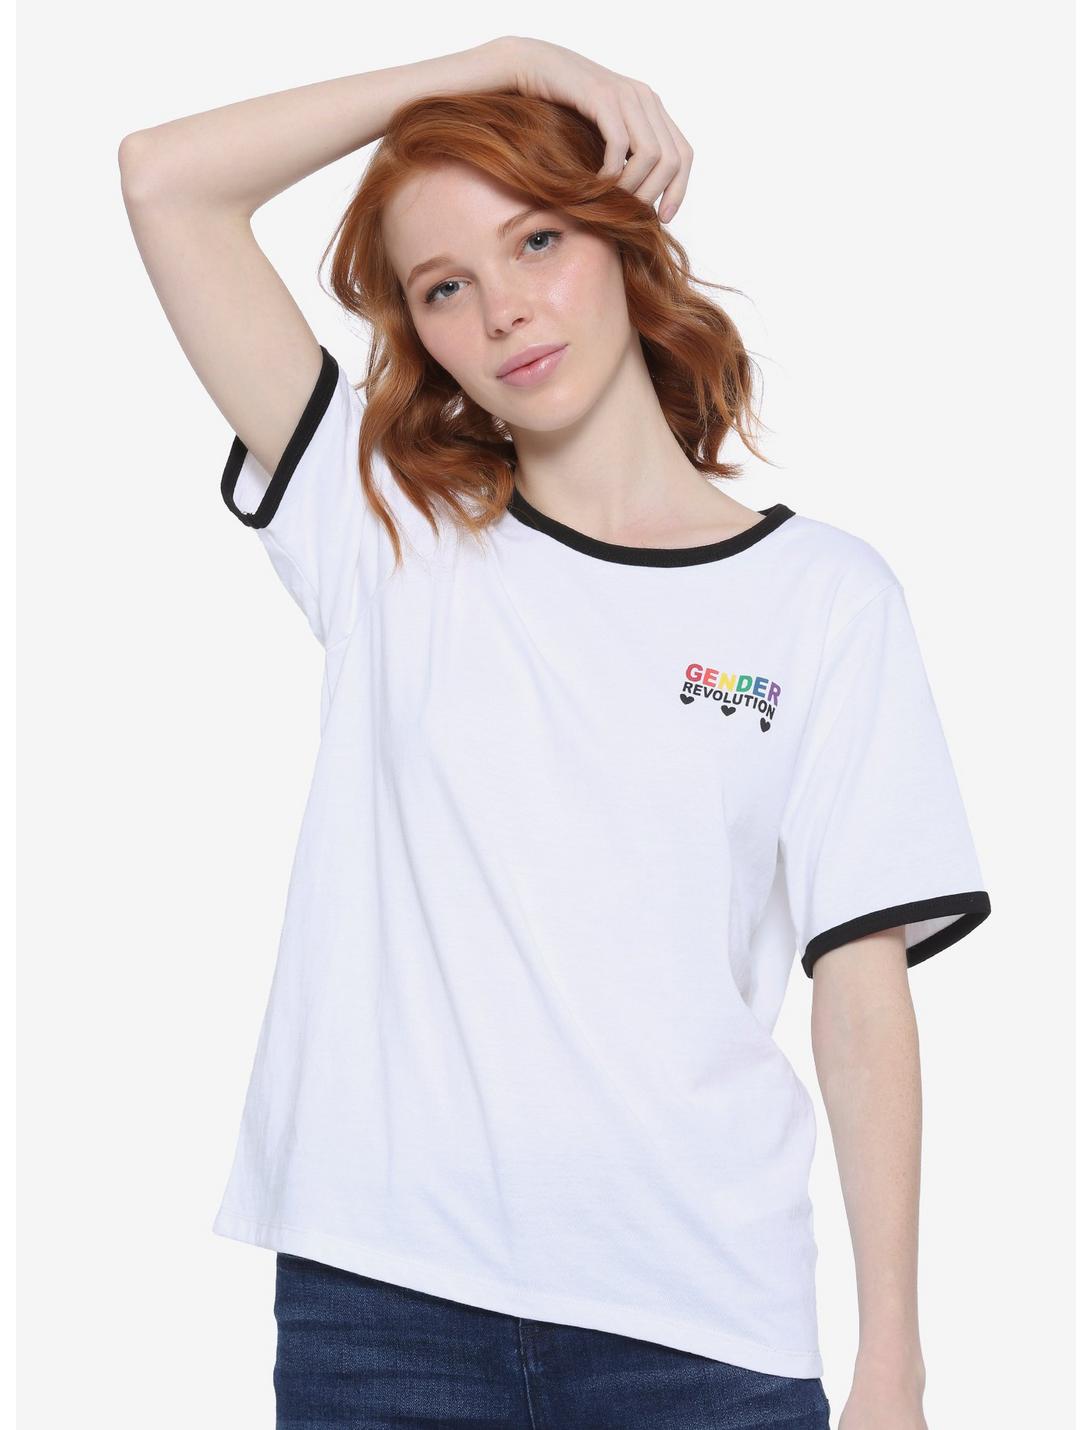 Daisy Street Gender Revolution Ringer T-Shirt, MULTI, hi-res